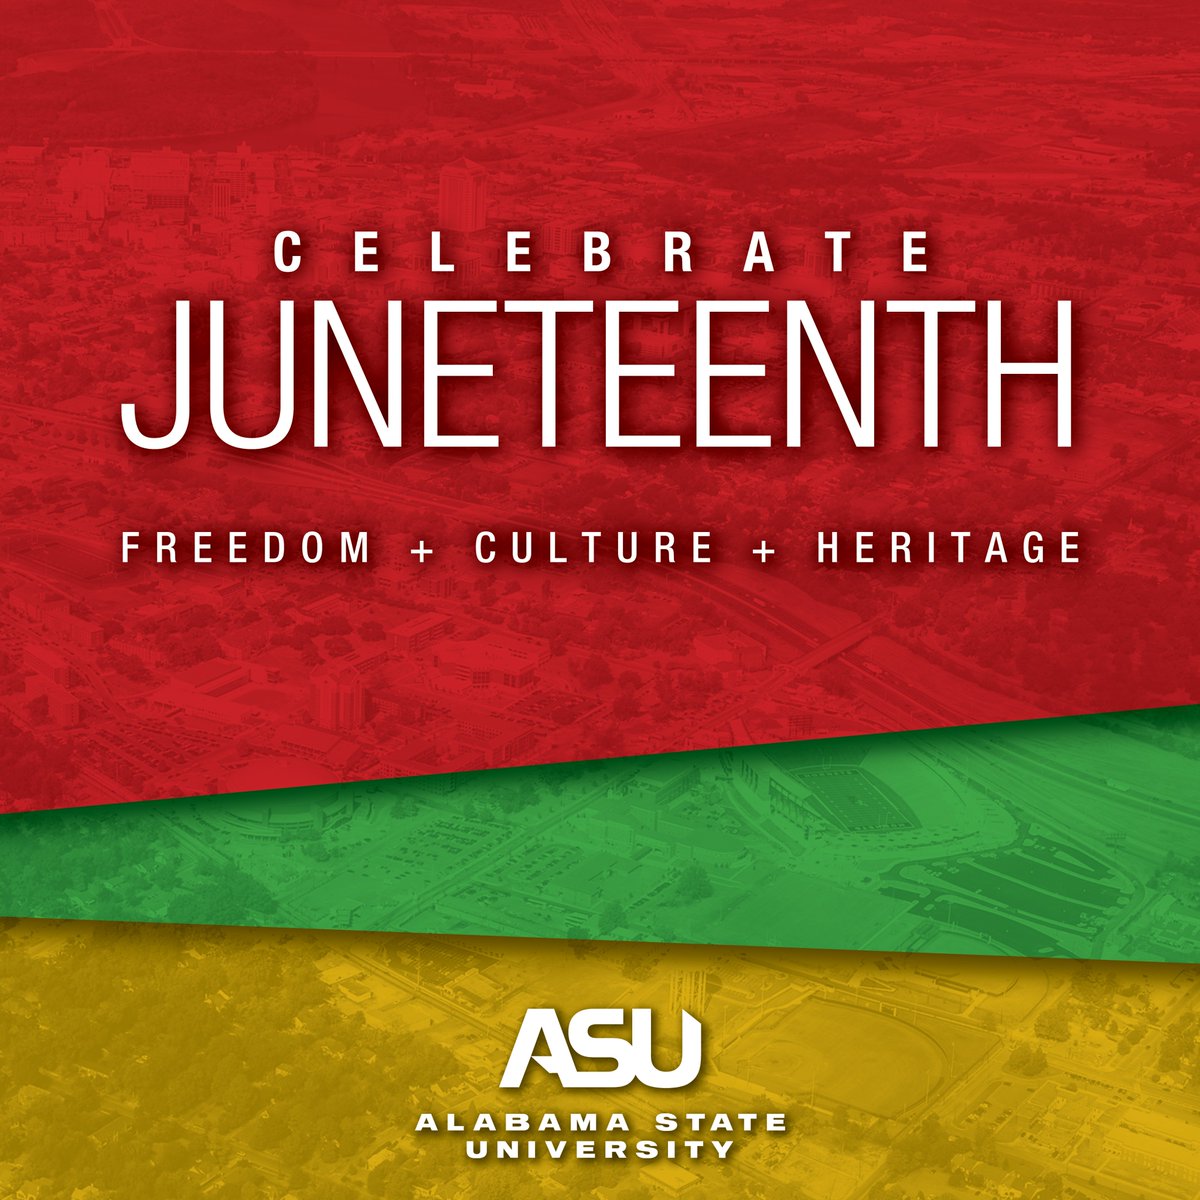 Celebrate #JUNETEENTH  #Freedom #Culture and #Heritage 

#myASU #bamastate